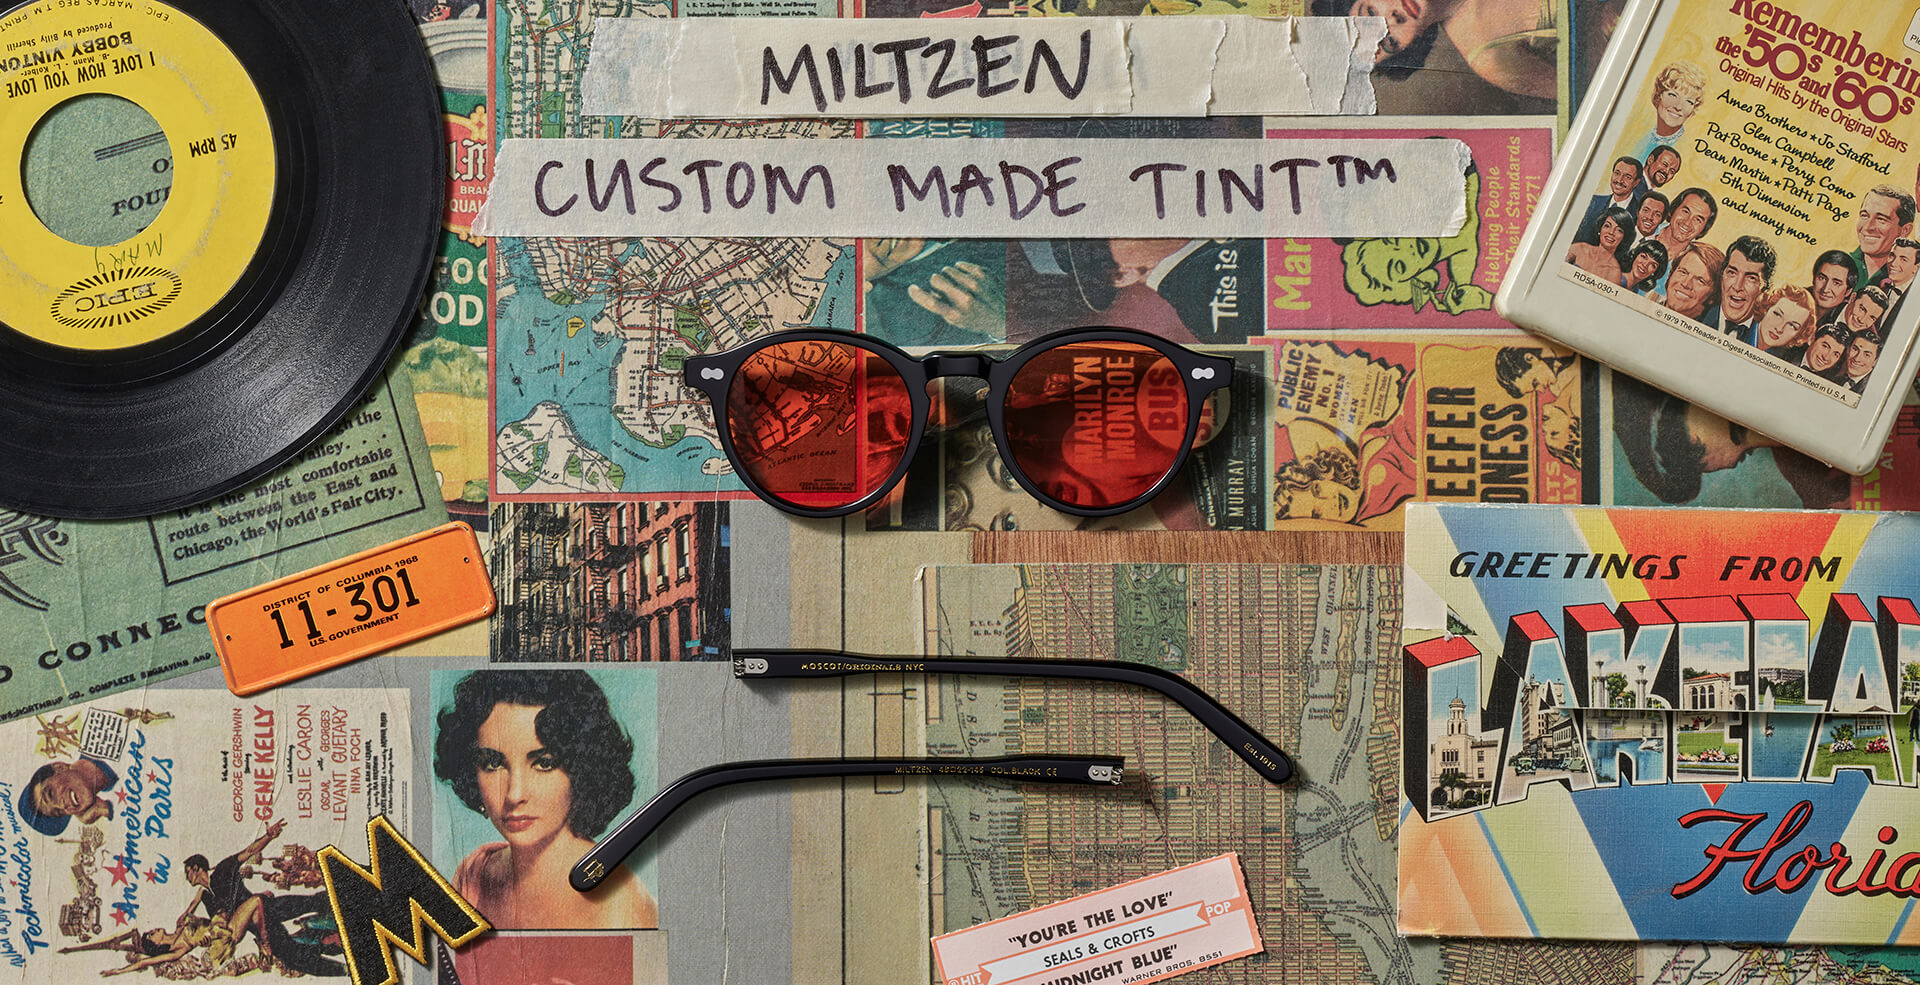 The MILTZEN with Custom Made Tints